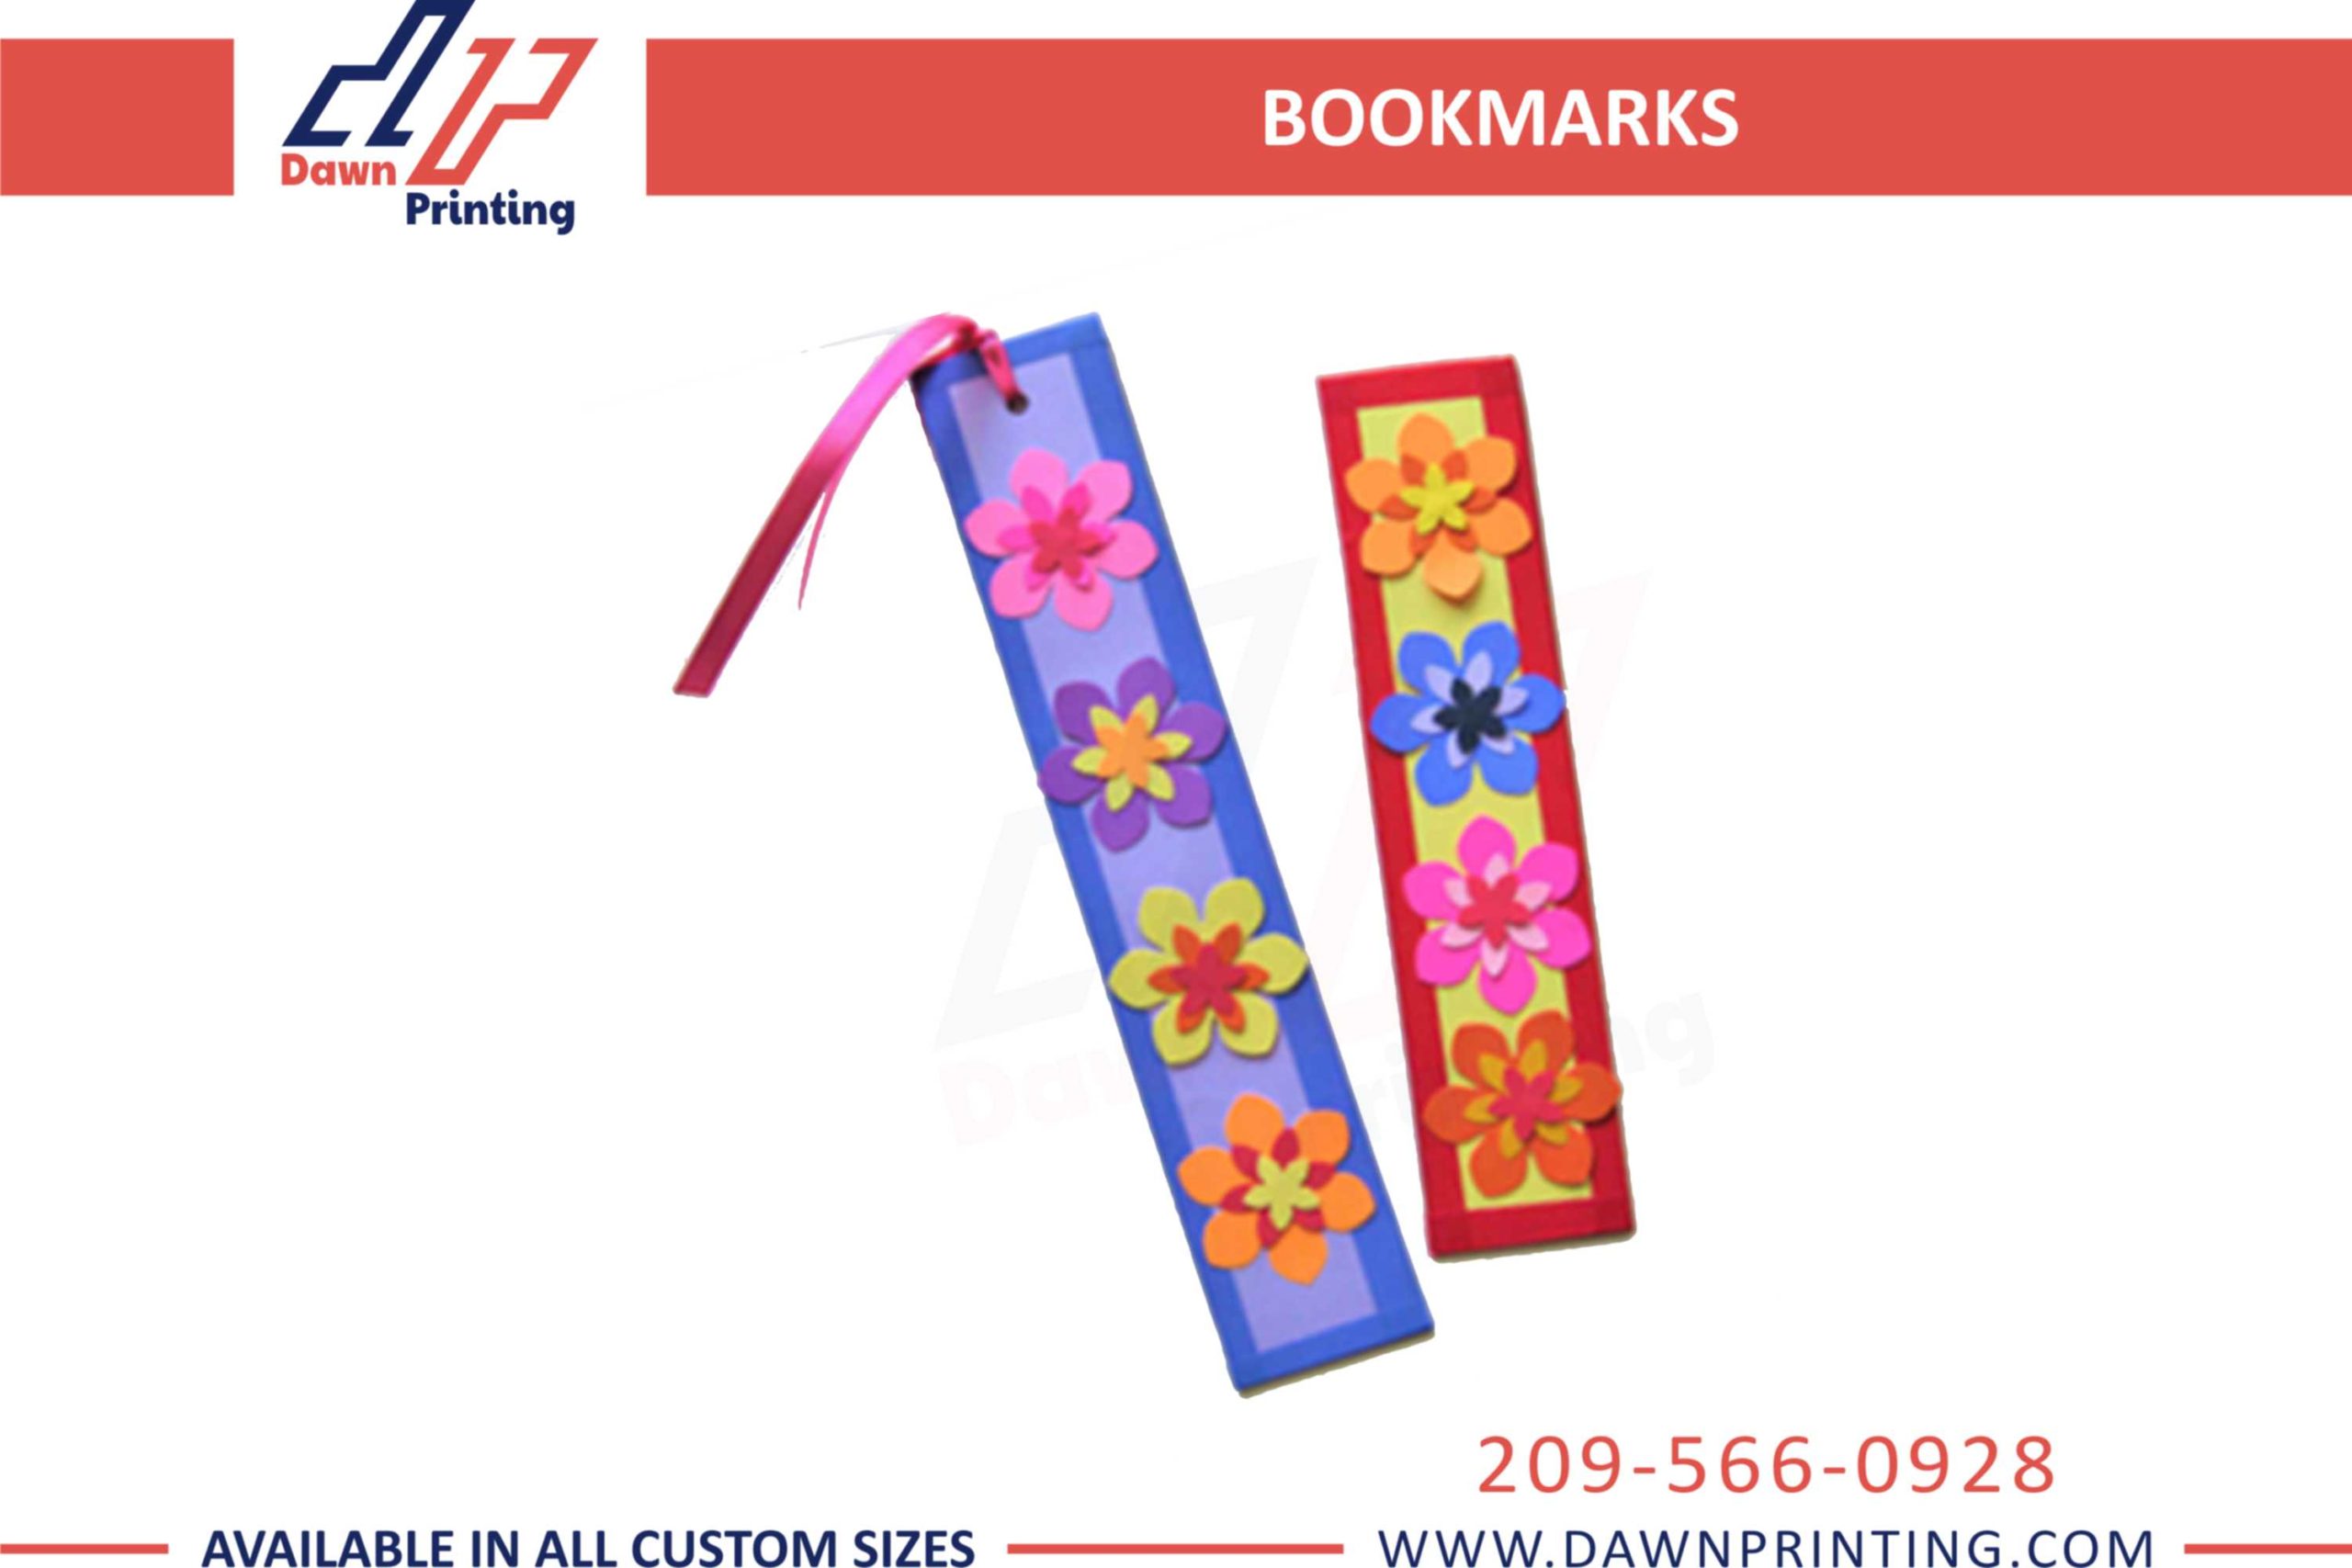 Creative Bookmarks - Dawn Printing